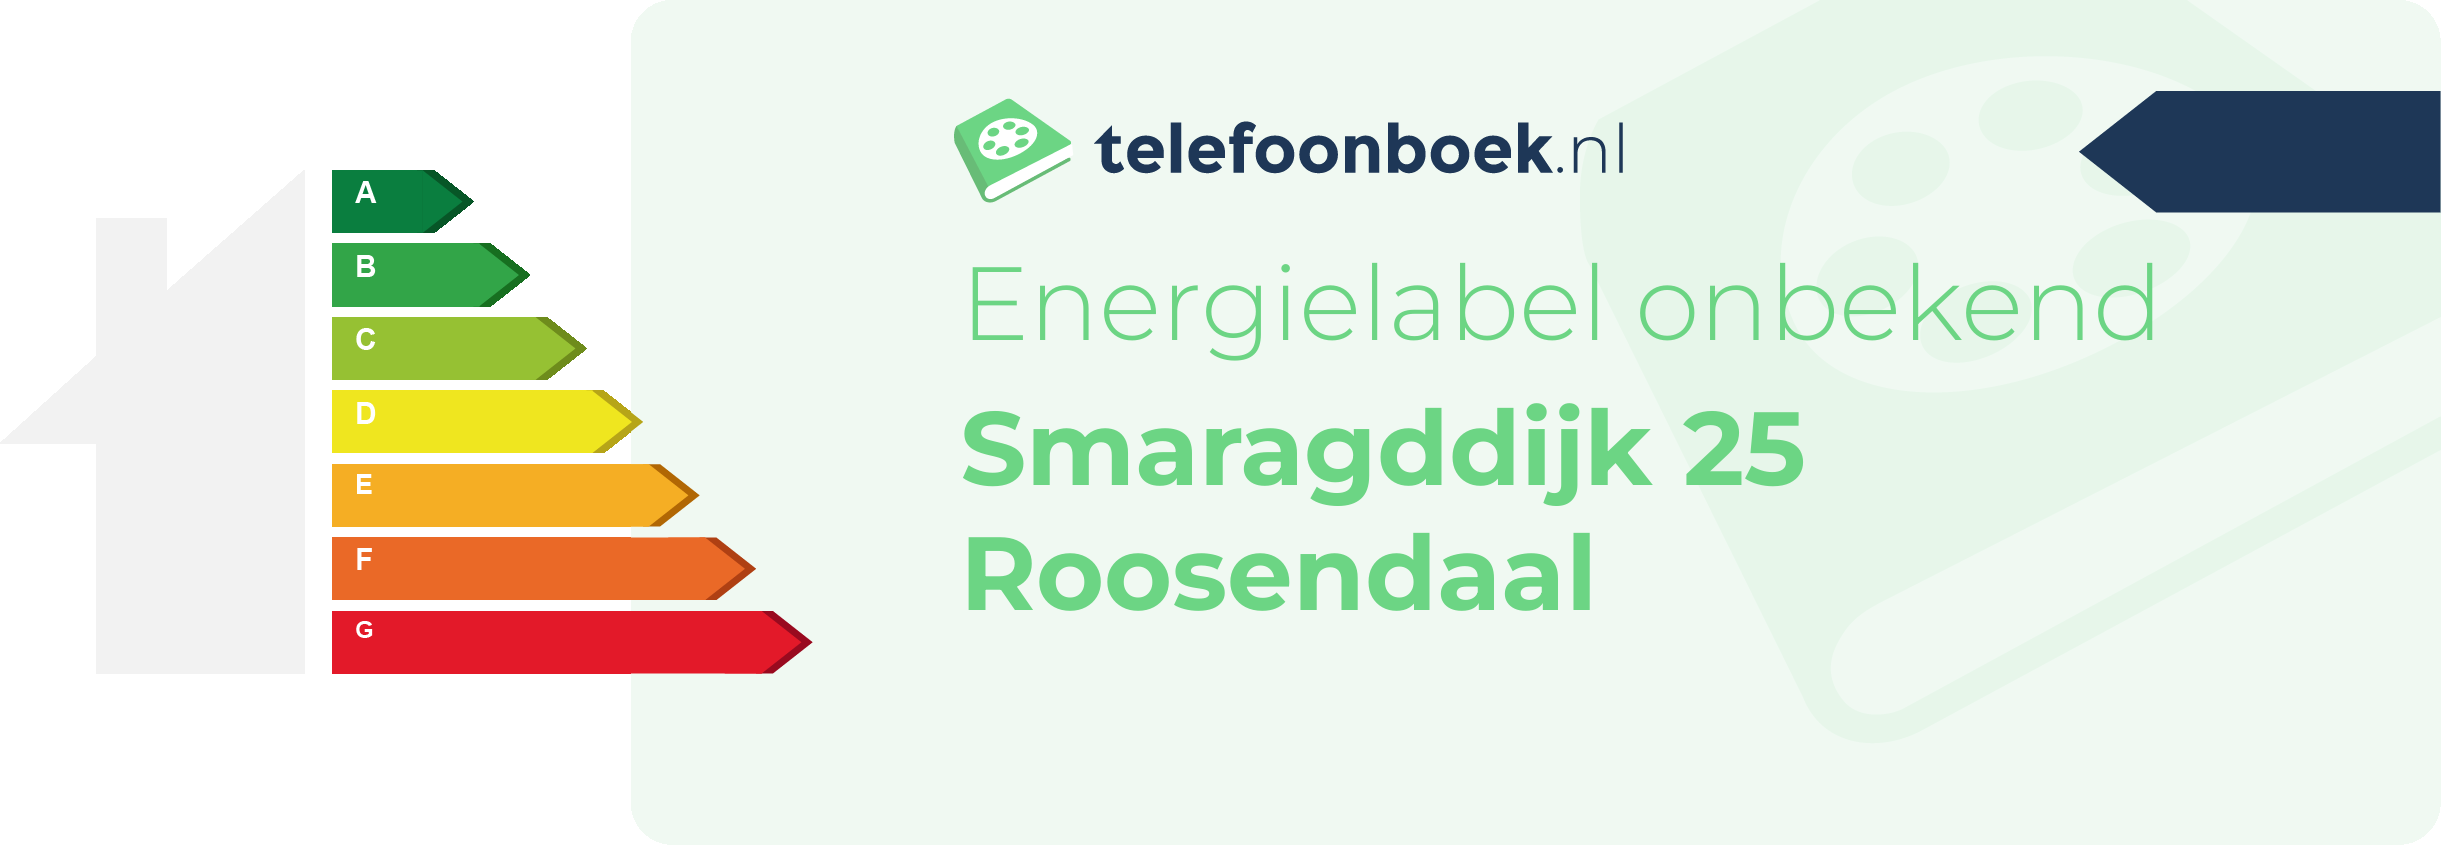 Energielabel Smaragddijk 25 Roosendaal